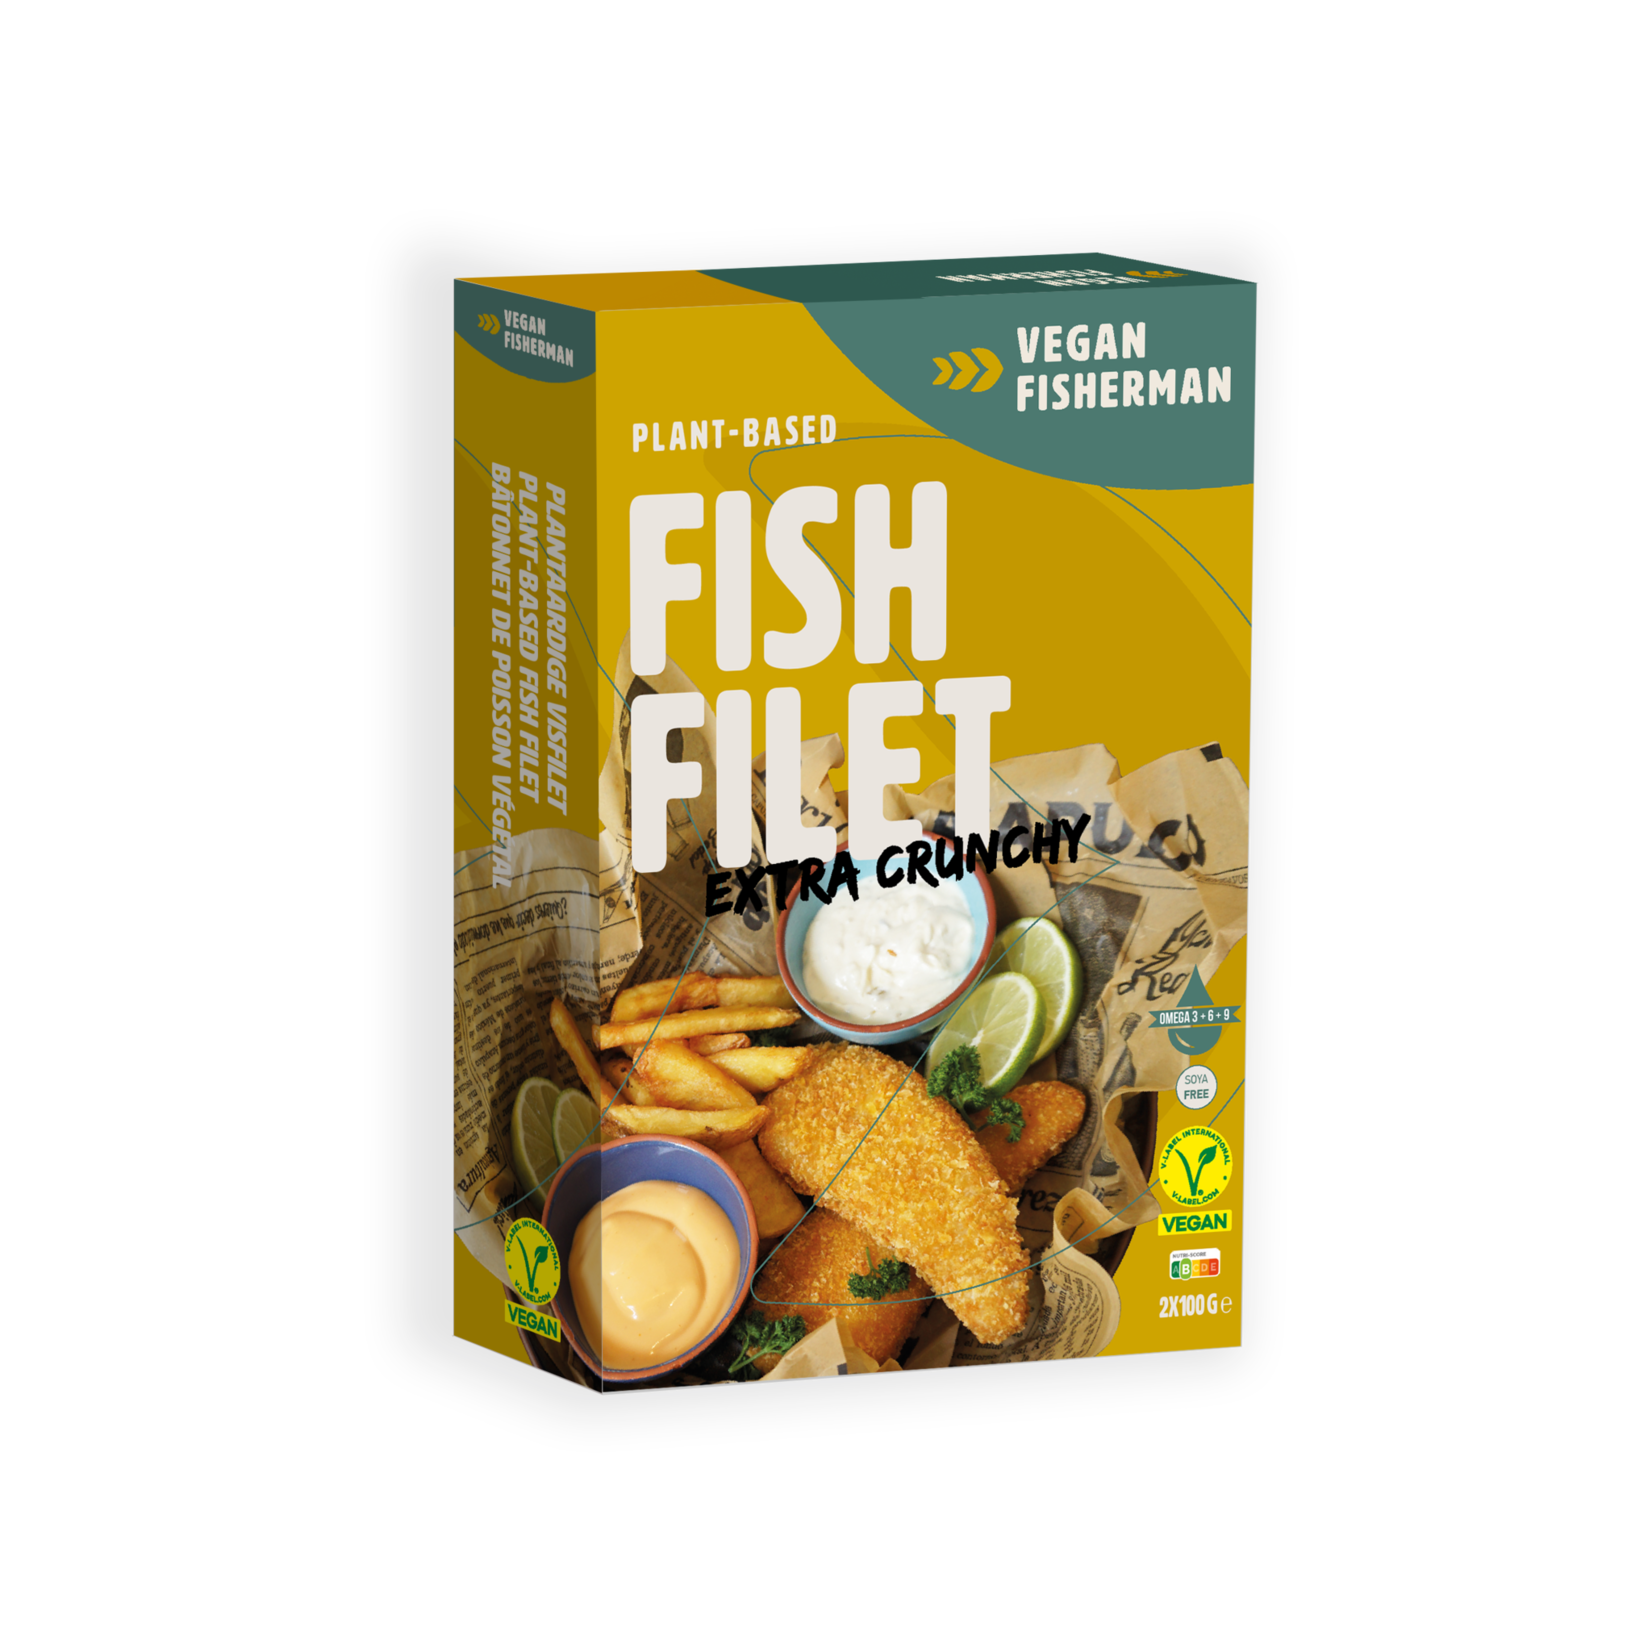 Vegan Visboer - Vegan Fisherman Family box: 4x Burgers 100 gr and 4x Fish Filet,